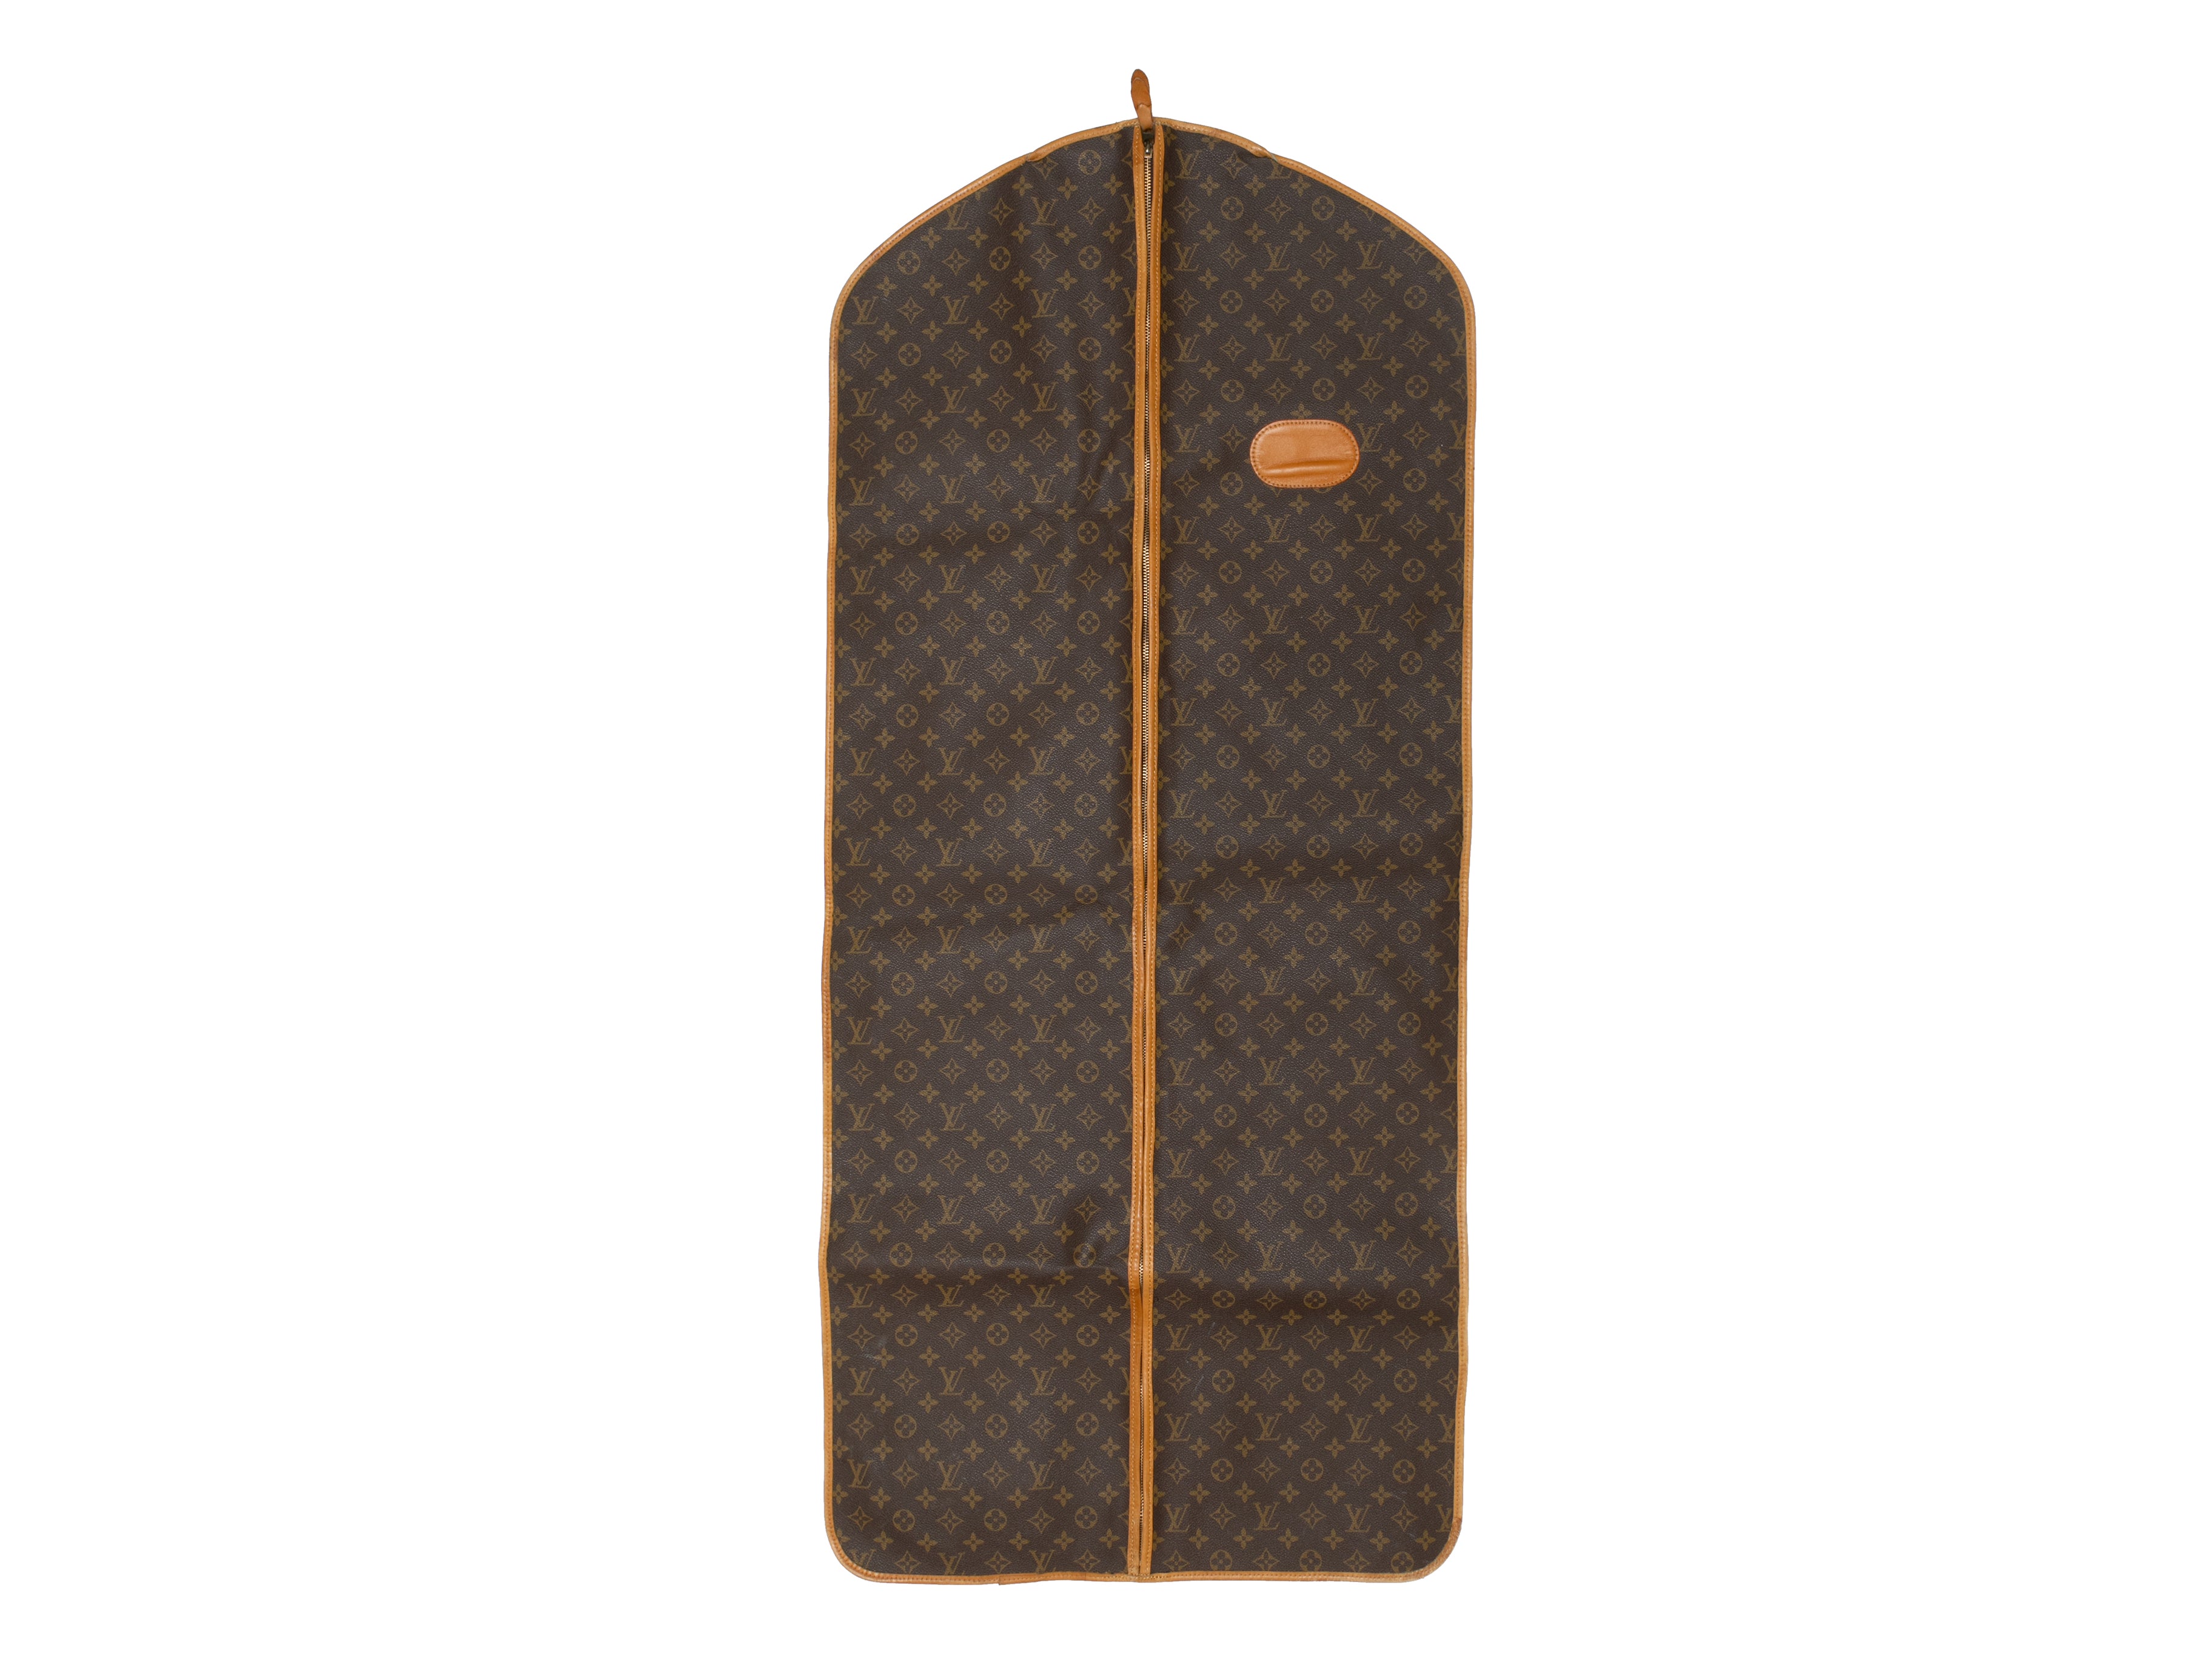 Brown Louis Vuitton Monogram Garment Bag